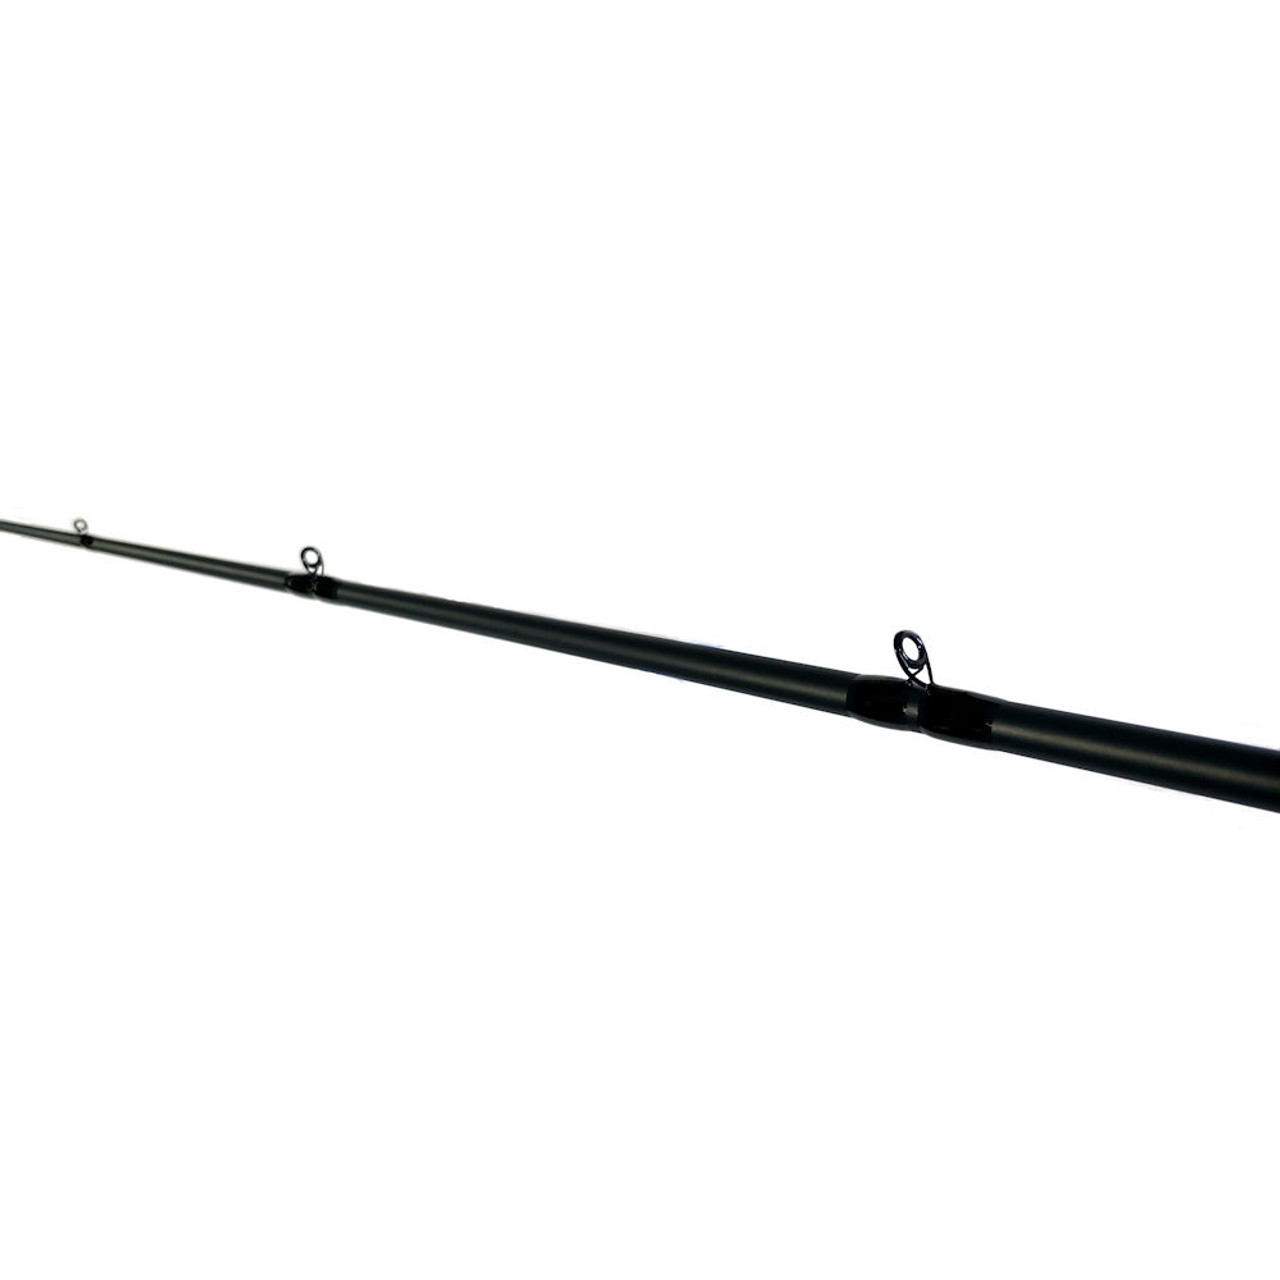 7'3 Heavy Extra Fast Casting Rod